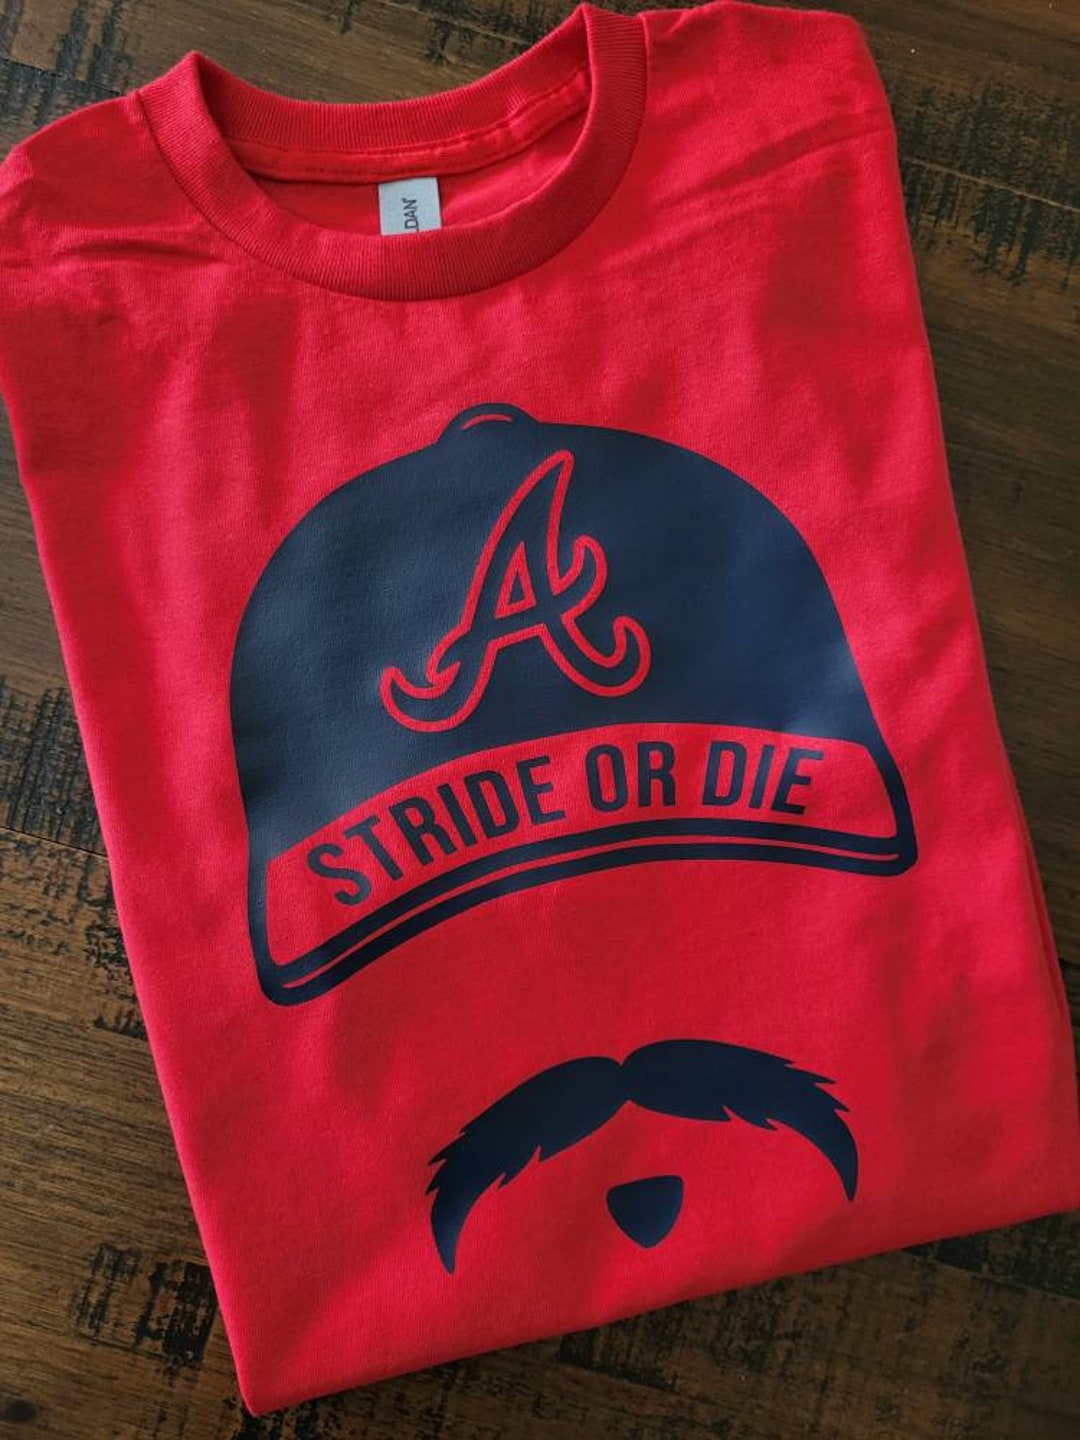 Atlanta Braves Chop on Strider Shirt 